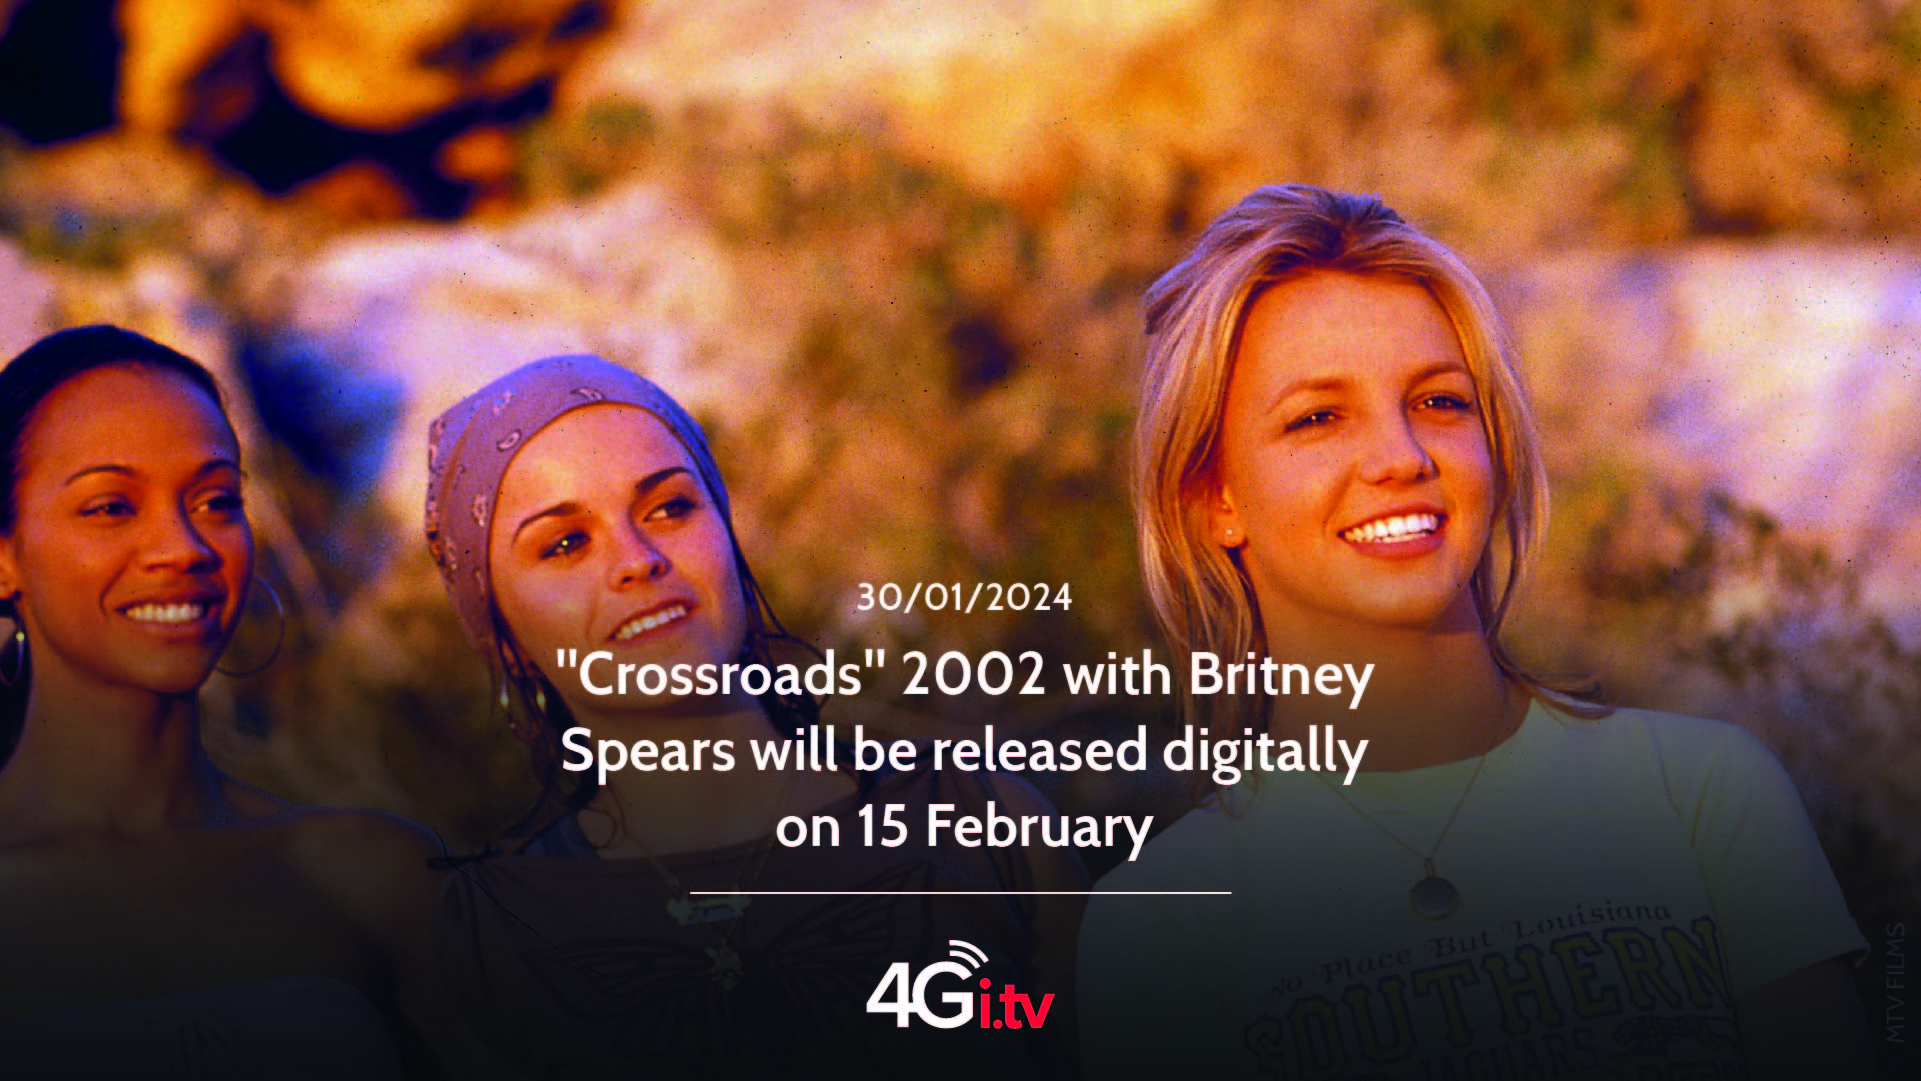 Lee más sobre el artículo “Crossroads” 2002 with Britney Spears will be released digitally on 15 February